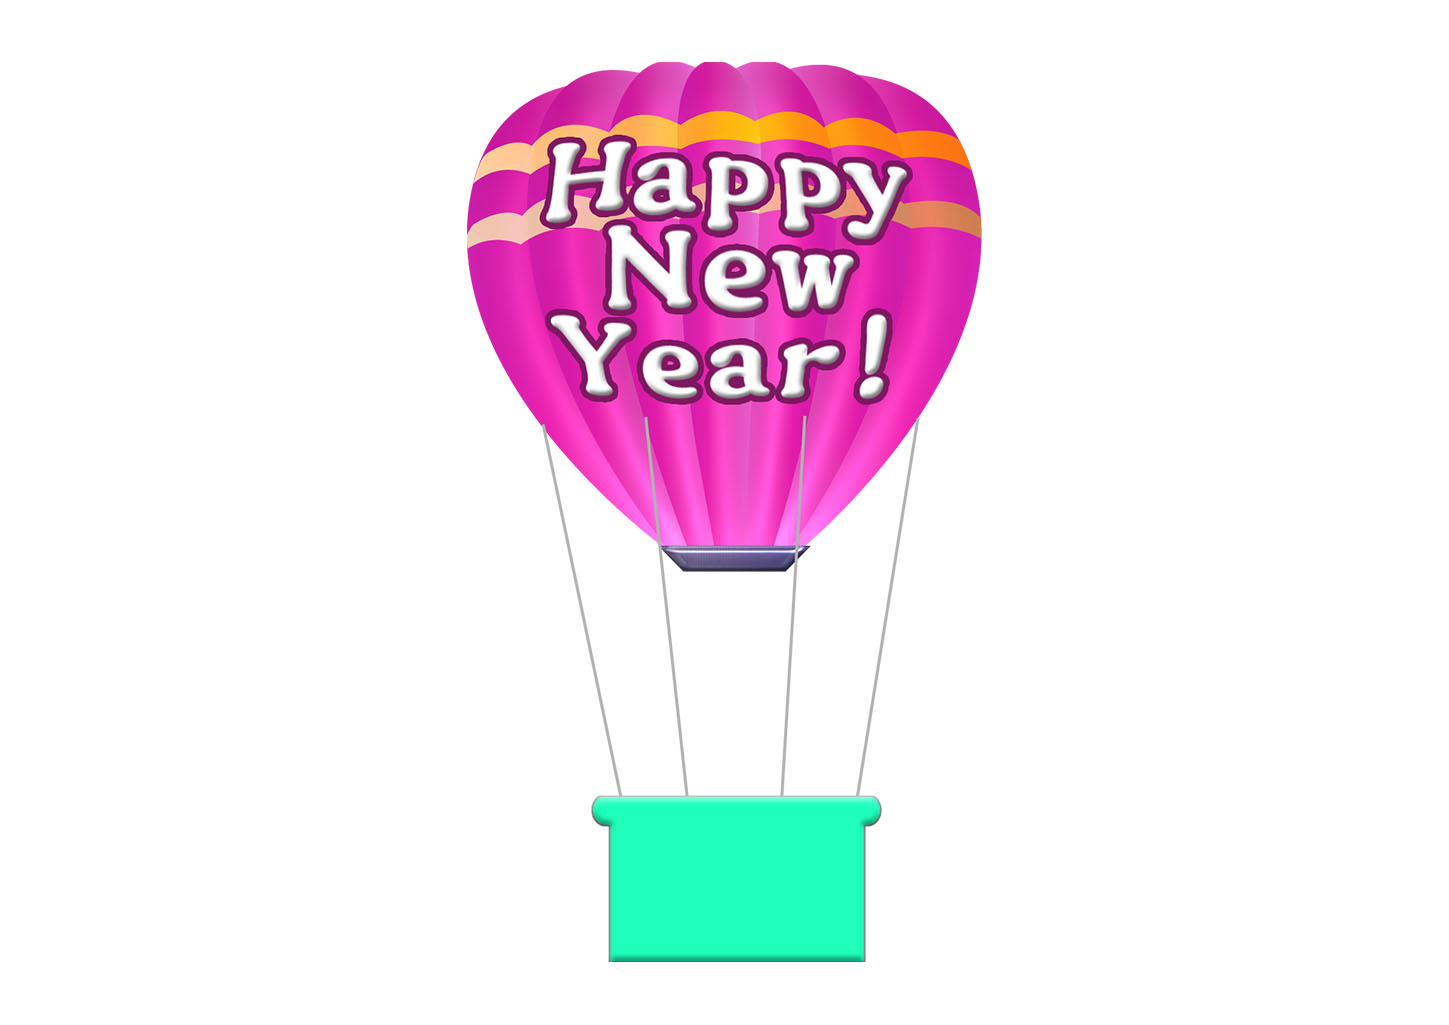 happy new year入り気球のイラスト